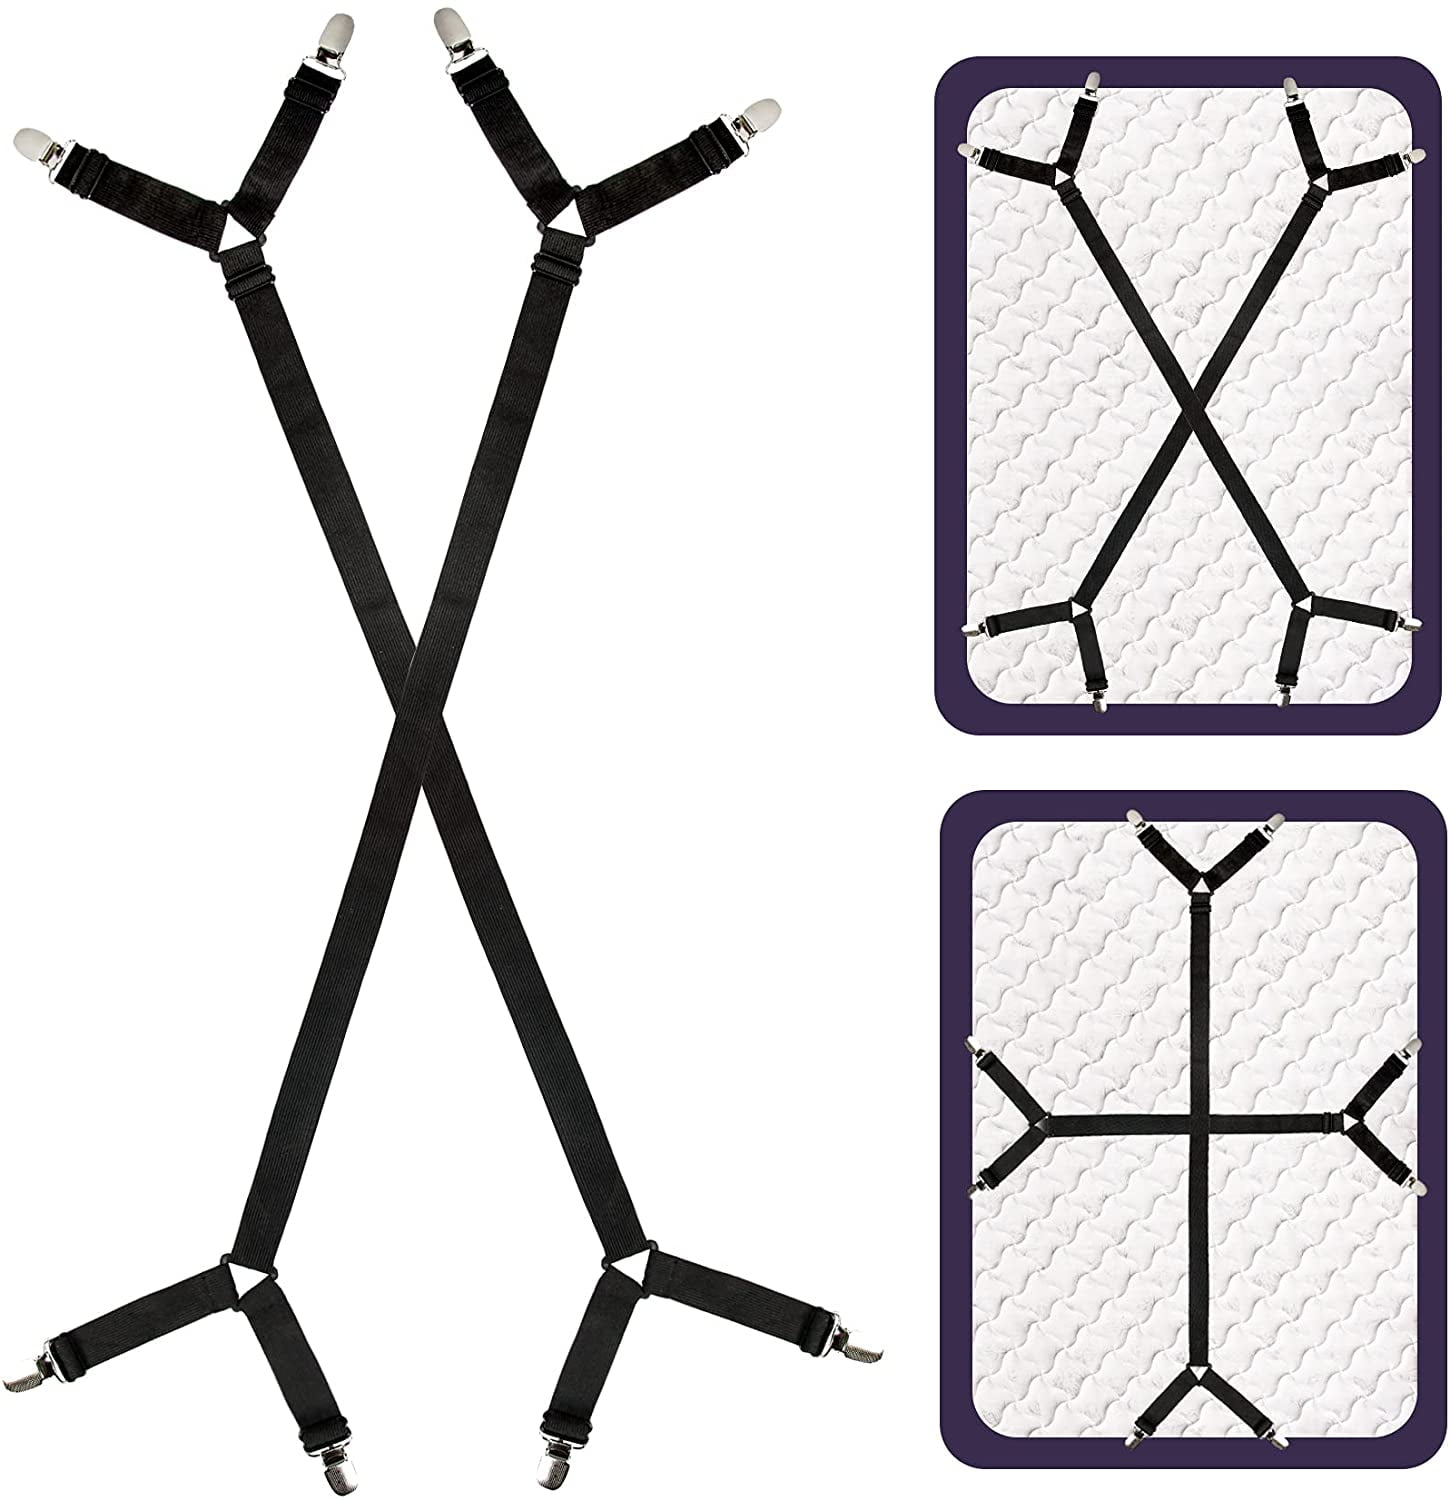 Crisscross Bed Fitted Sheet Straps Suspenders Gripper Holder Fastener Adjustable 